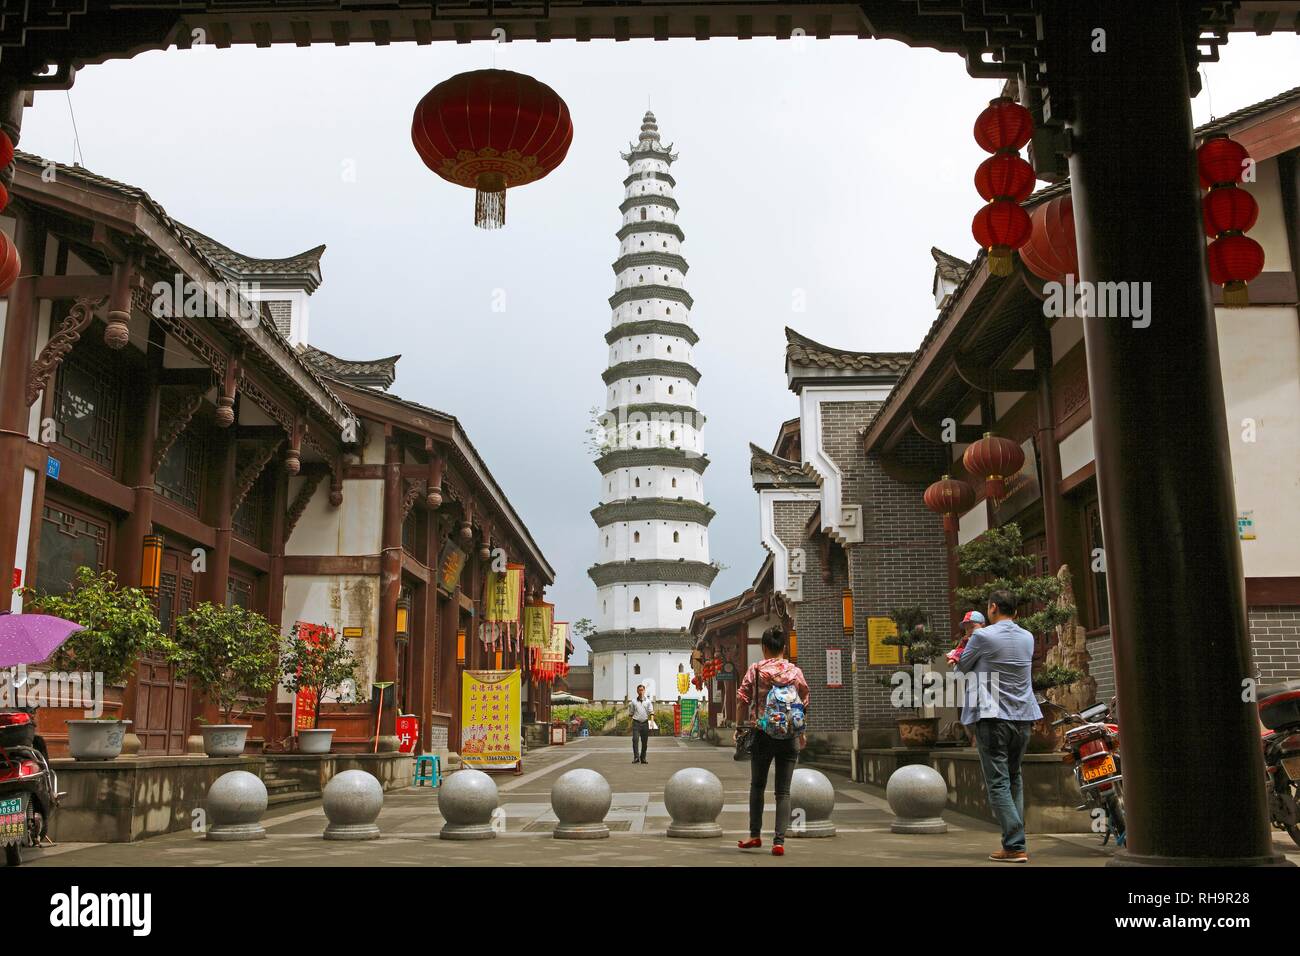 Old pagoda and alley, fishing town Diao Yu Cheng, Chongqing province, China Stock Photo